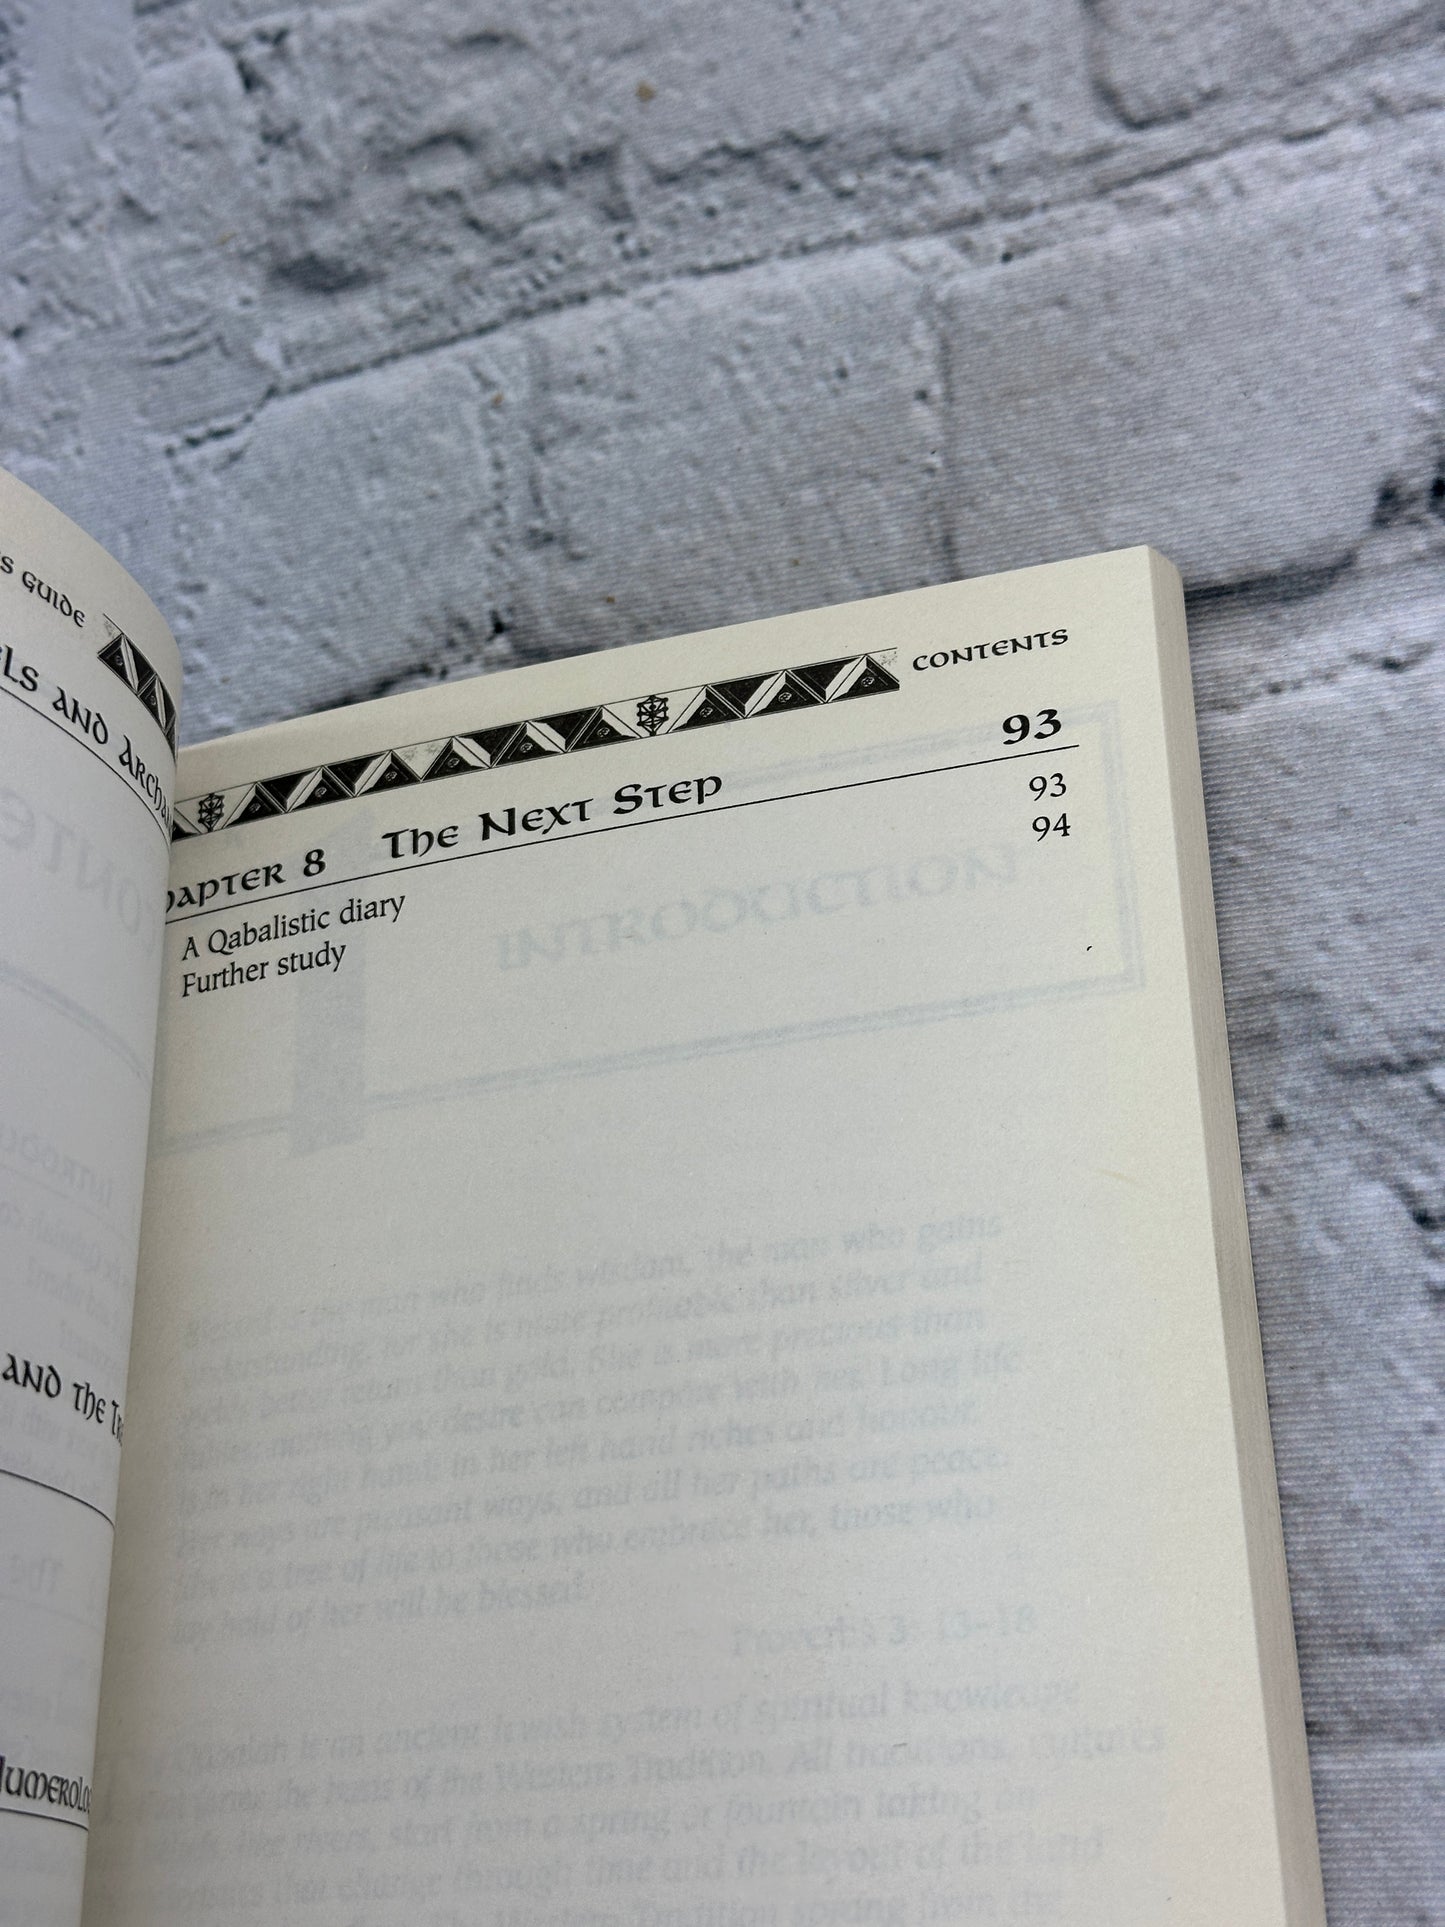 The Qabalah: A Beginner's Guide by Kate Rheeders [1996 · First Printing]